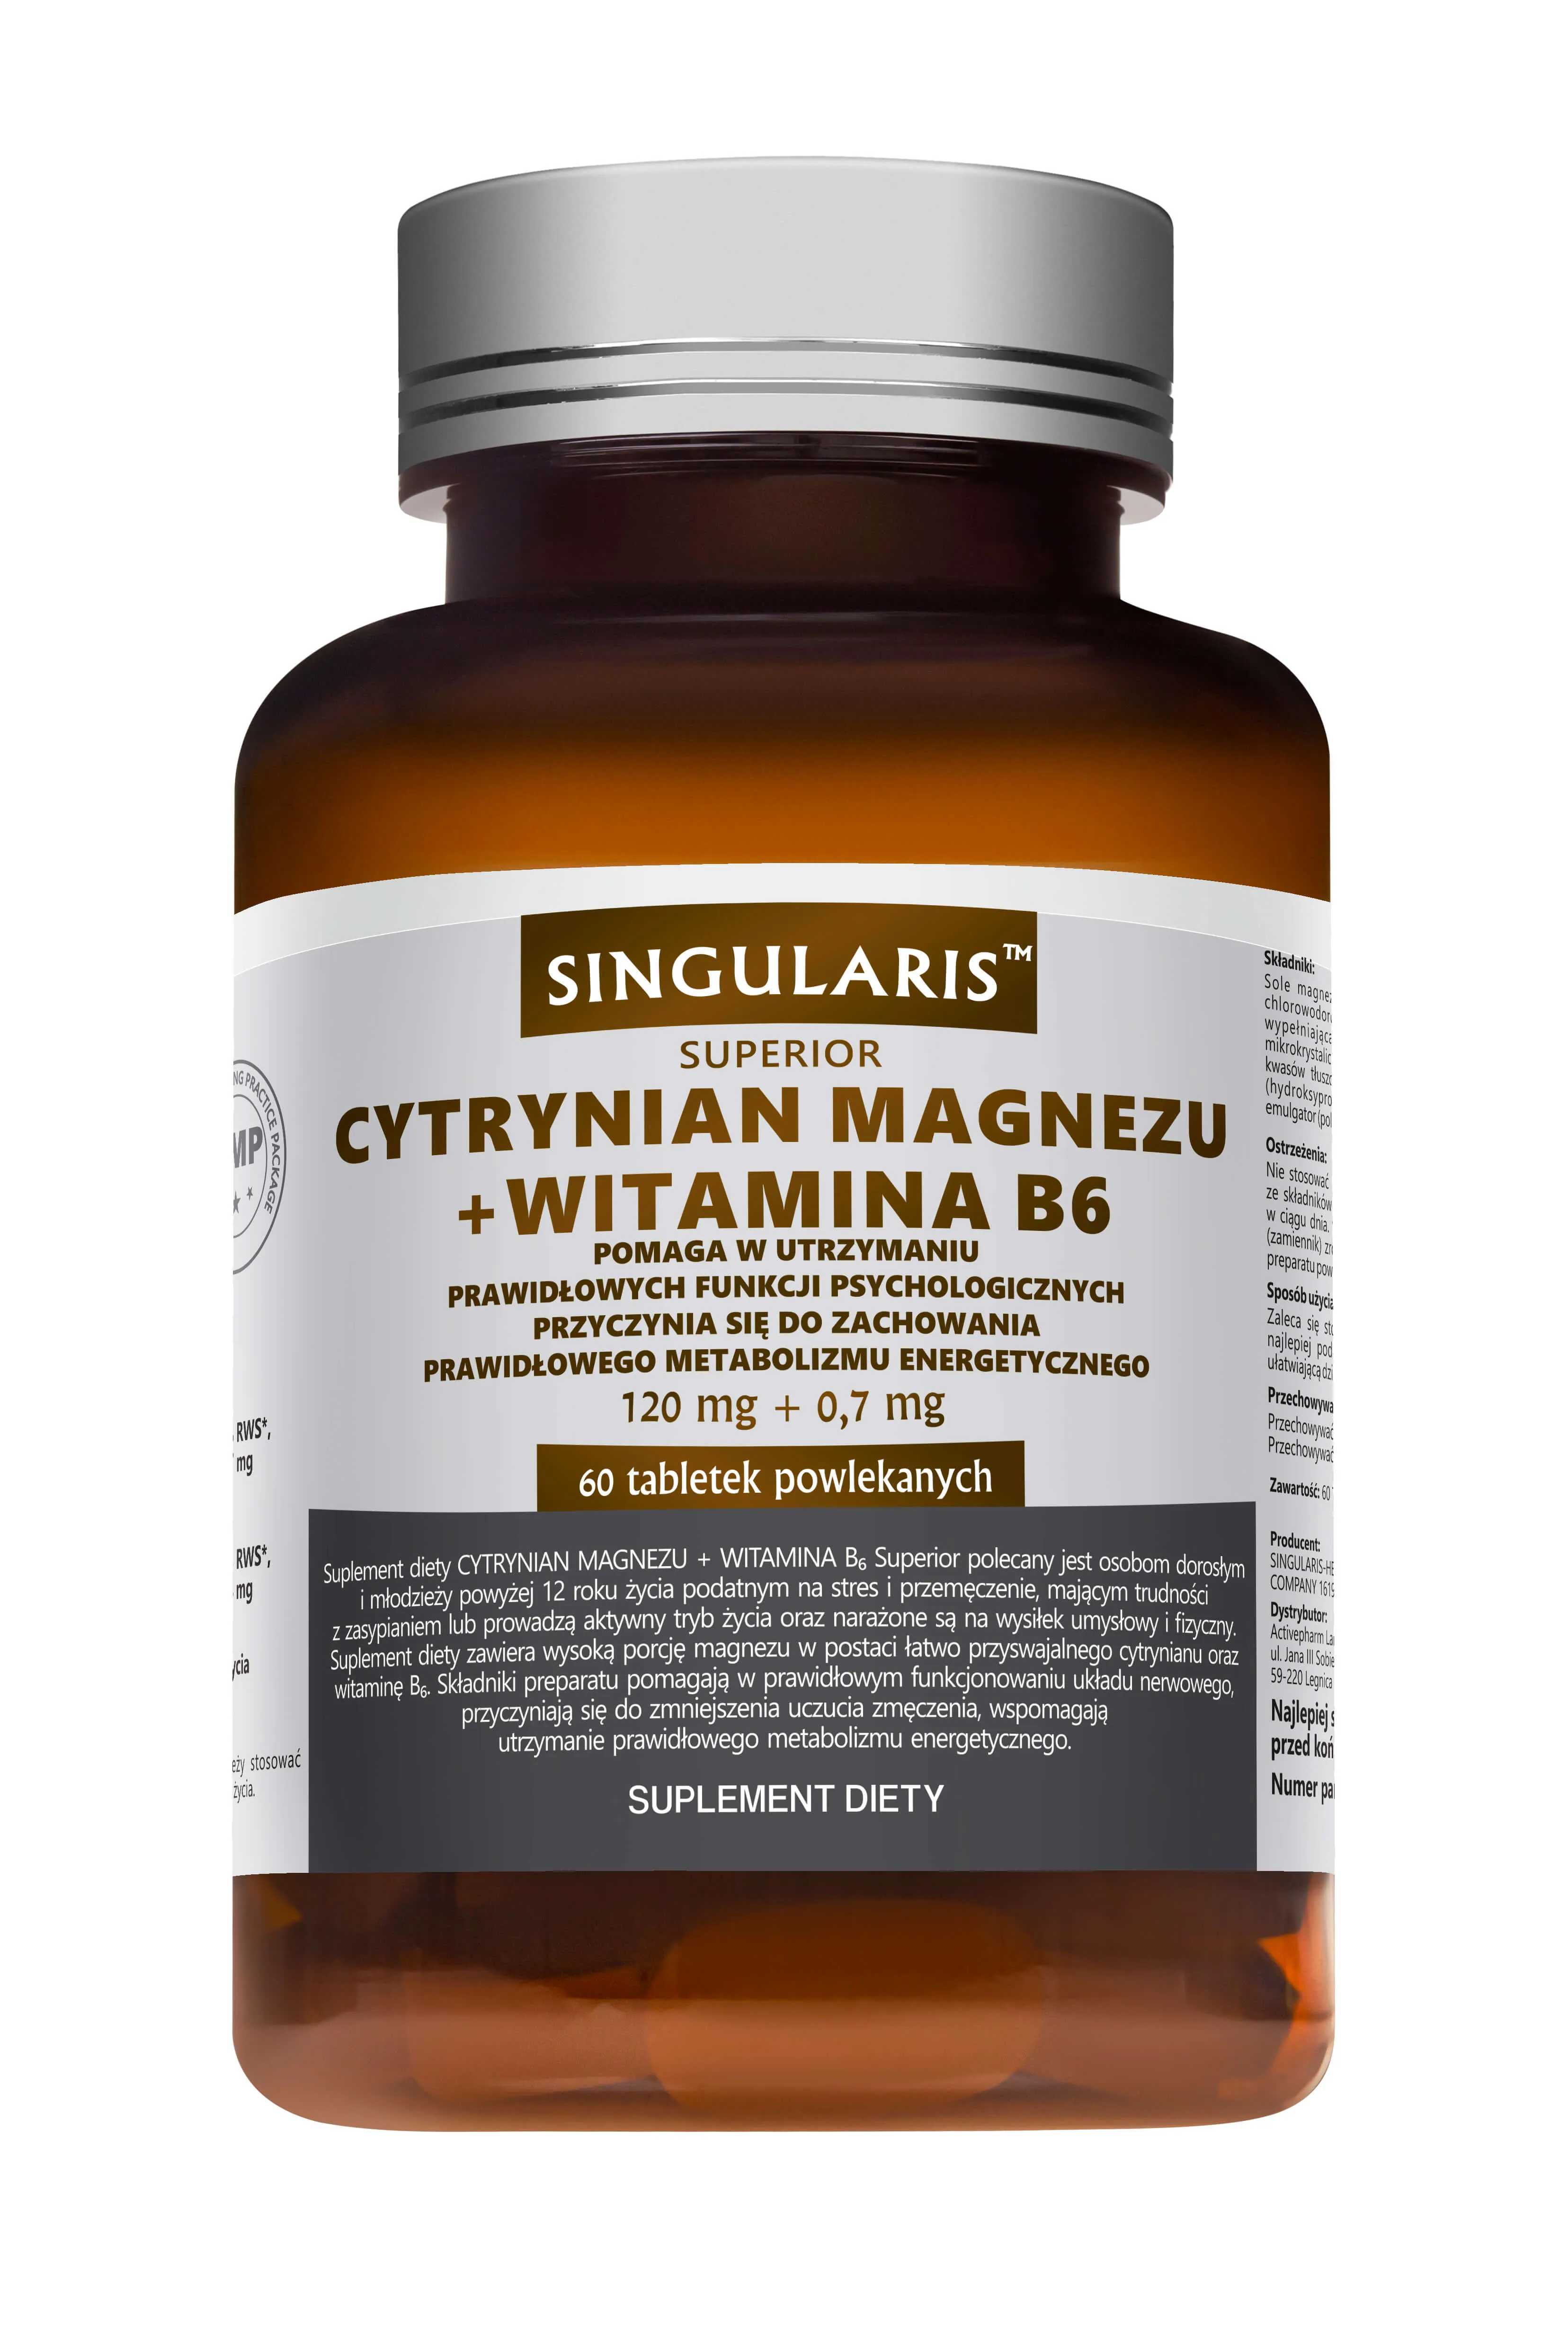 Singularis Superior Cytrynian Magnezu + Witamina B6, suplement diety, 60 tabletek